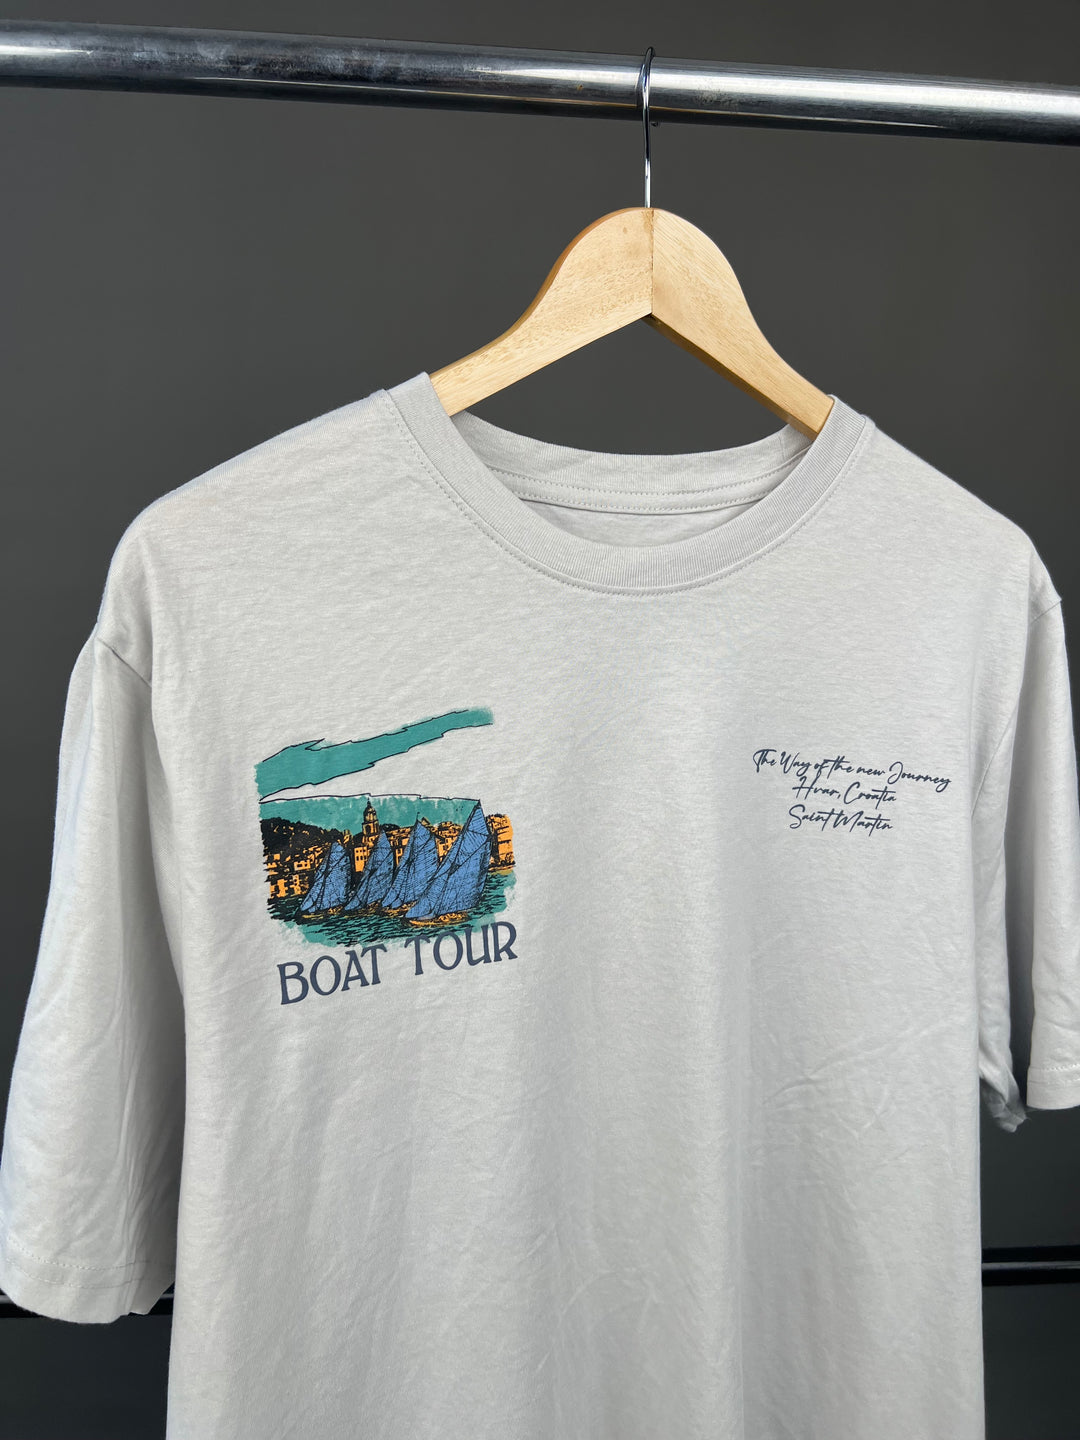 Garage Boat Tour t-shirt